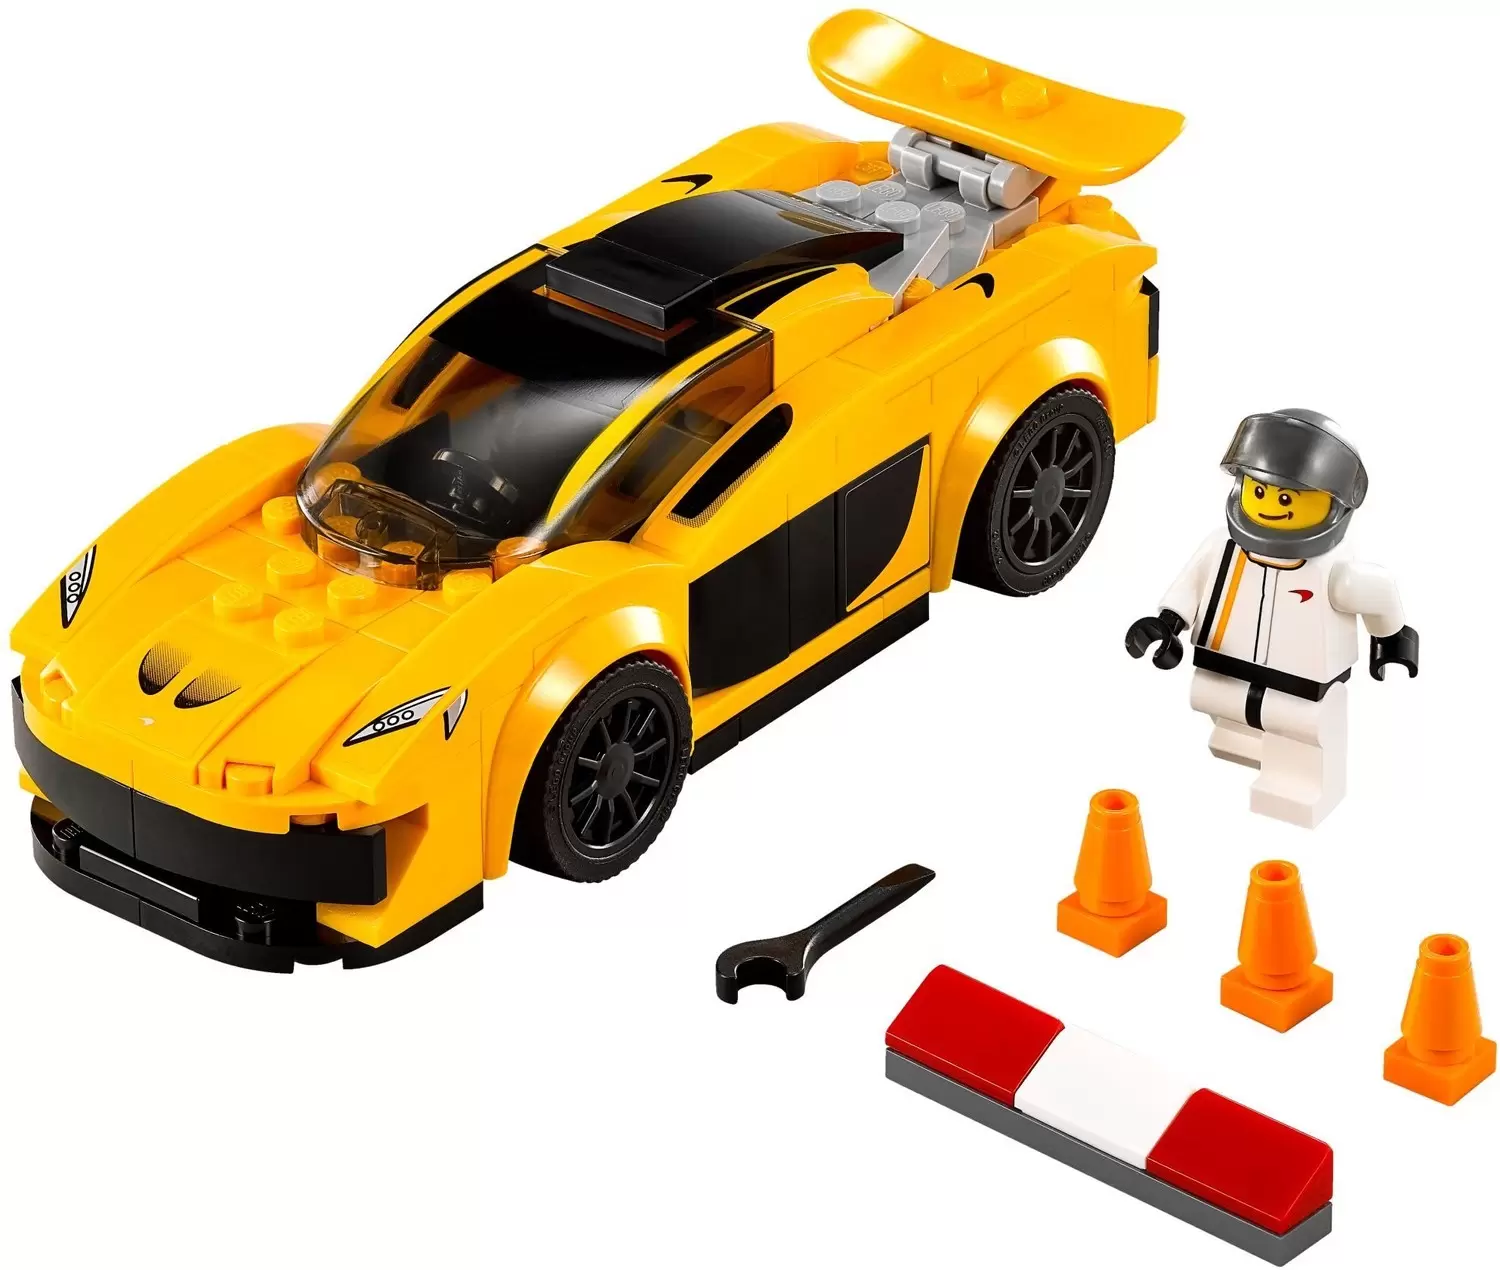 LEGO Speed Champions - McLaren P1